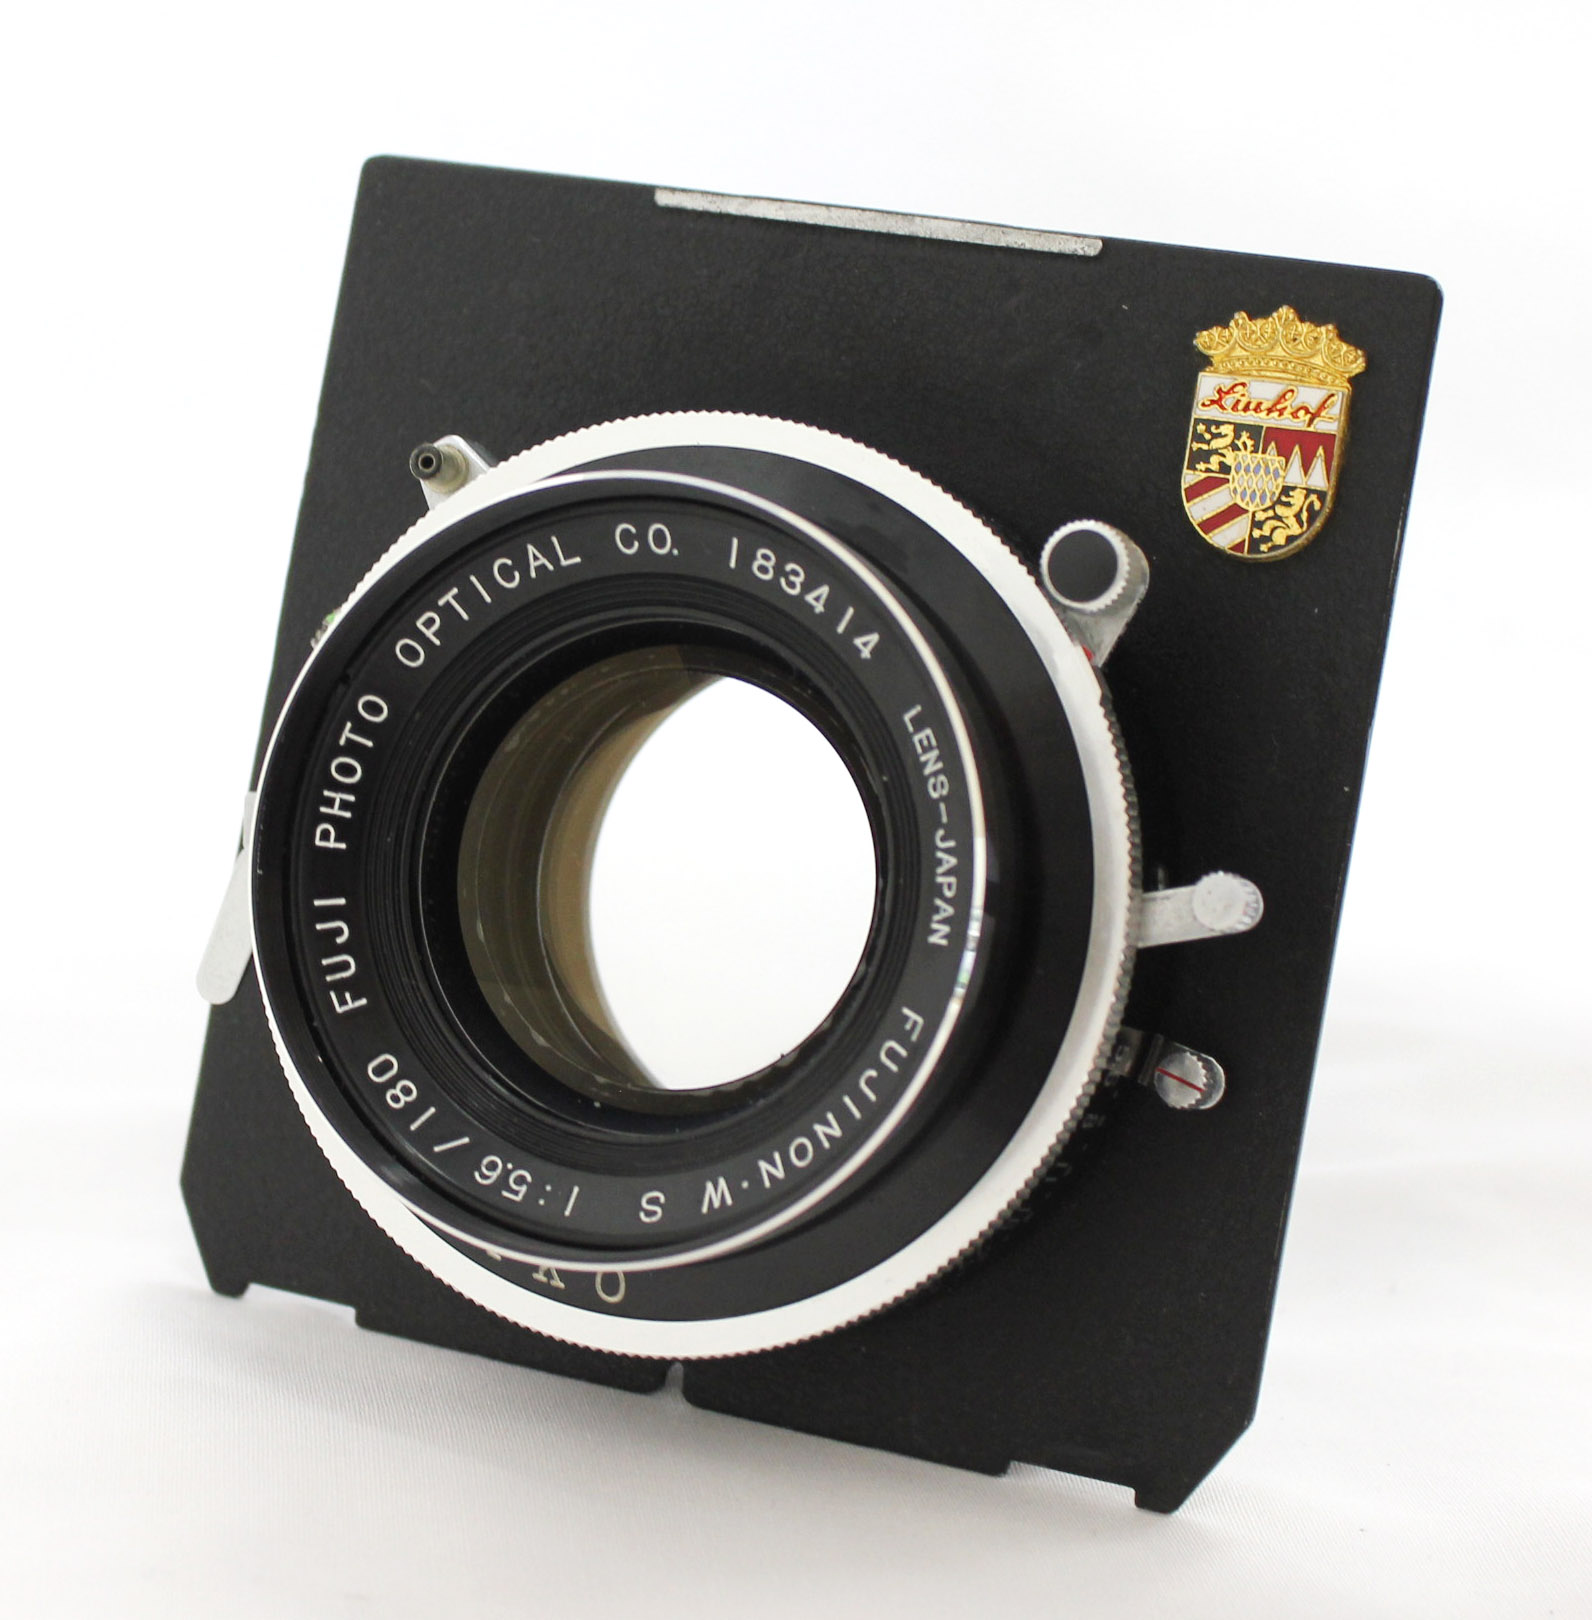 Japan Used Camera Shop | Fuji Fujinon W S 180mm F/5.6 4x5 Large Format Lens w/ Seiko Shutter Linhof Board from Japan